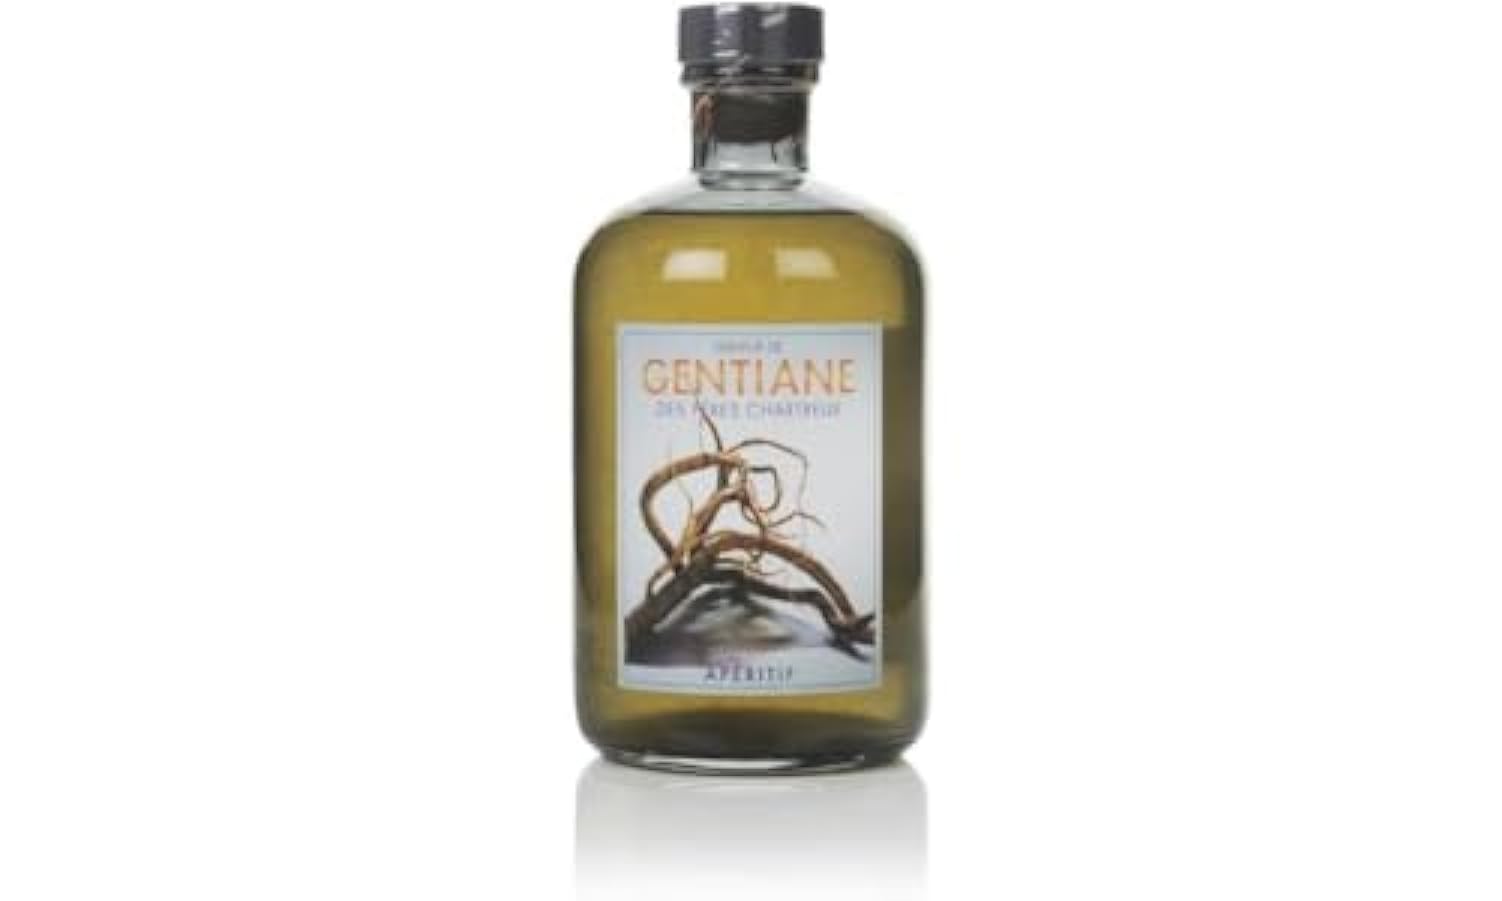 Chartreuse Gentiane Liquore -1000 ml 121325621